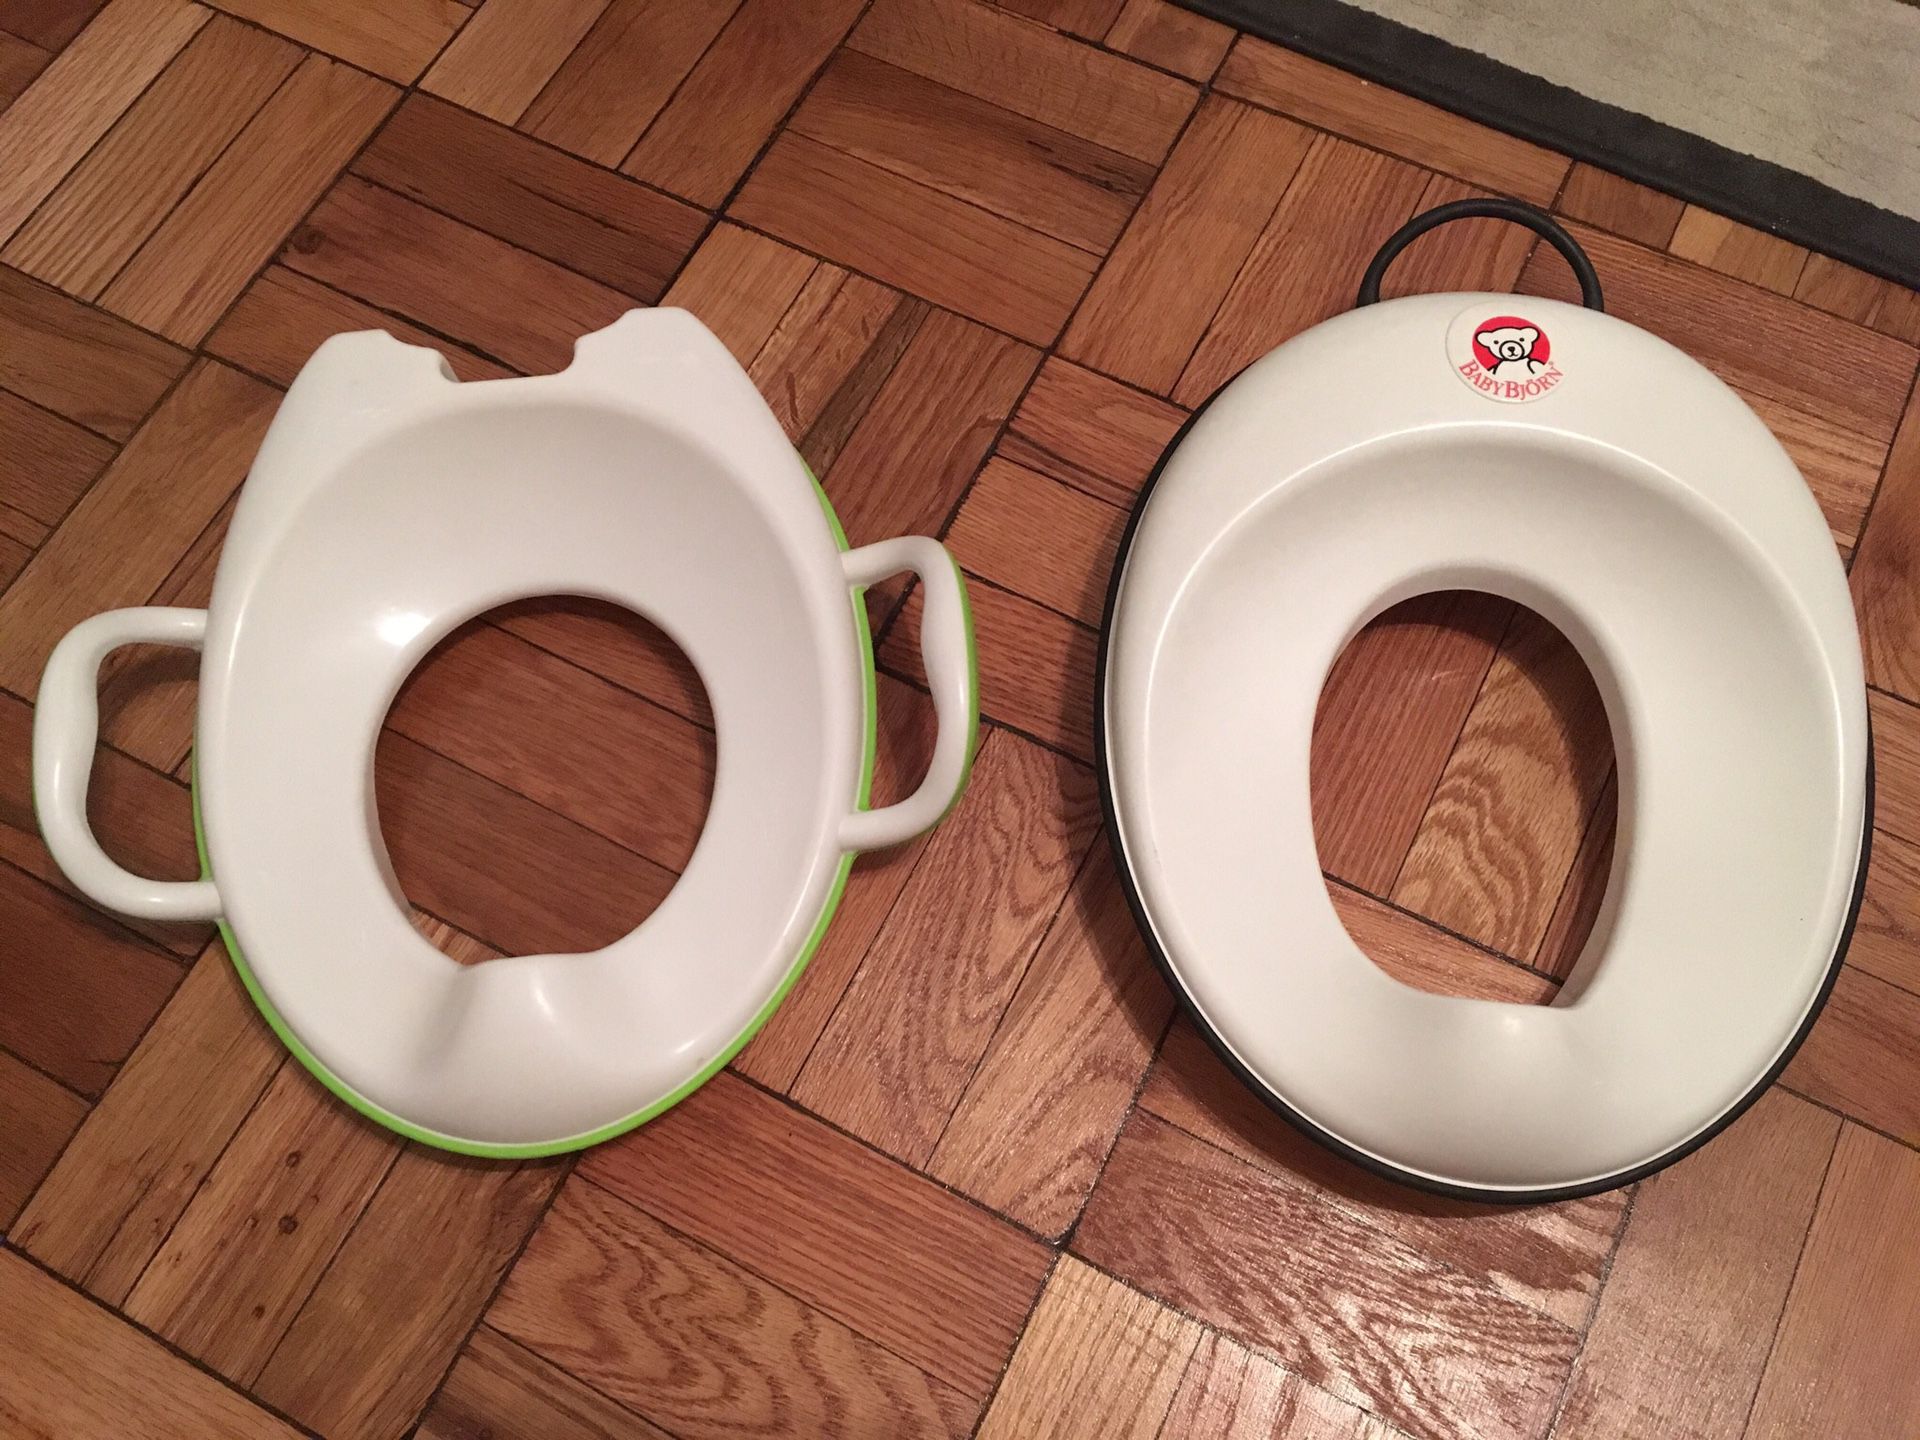 Potty training toilet seats